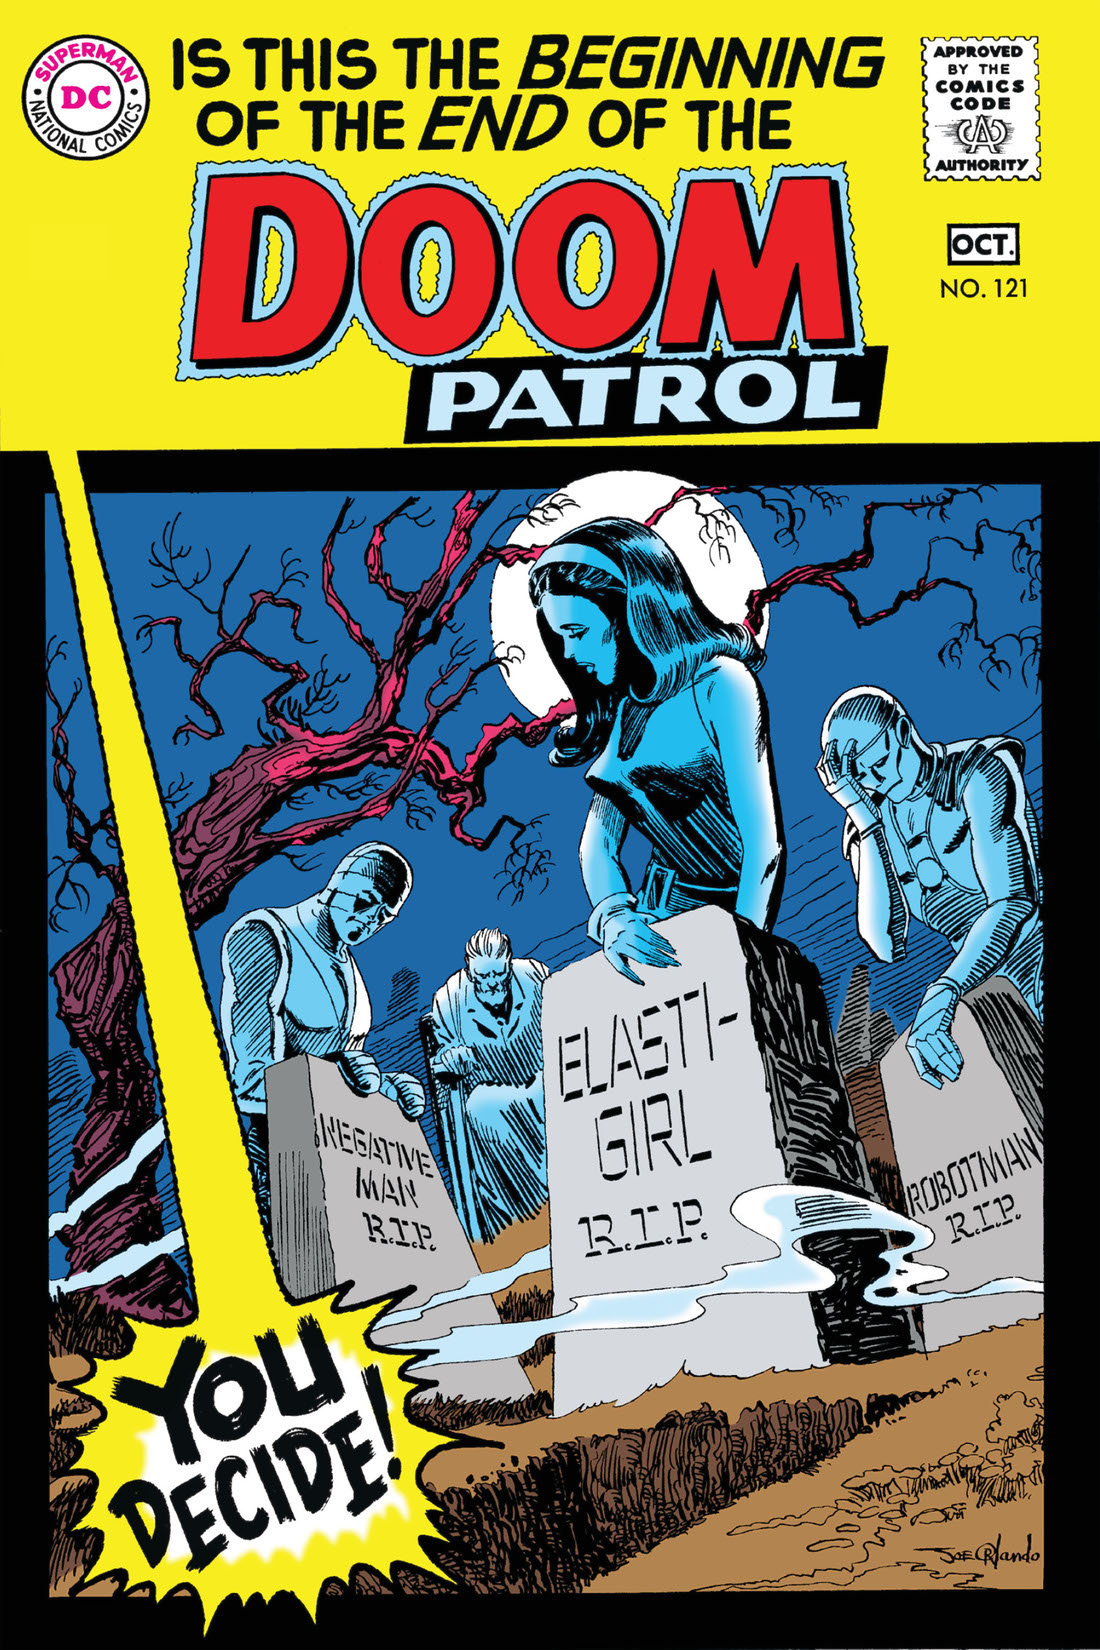 Doom Patrol (1964-) #121 preview images